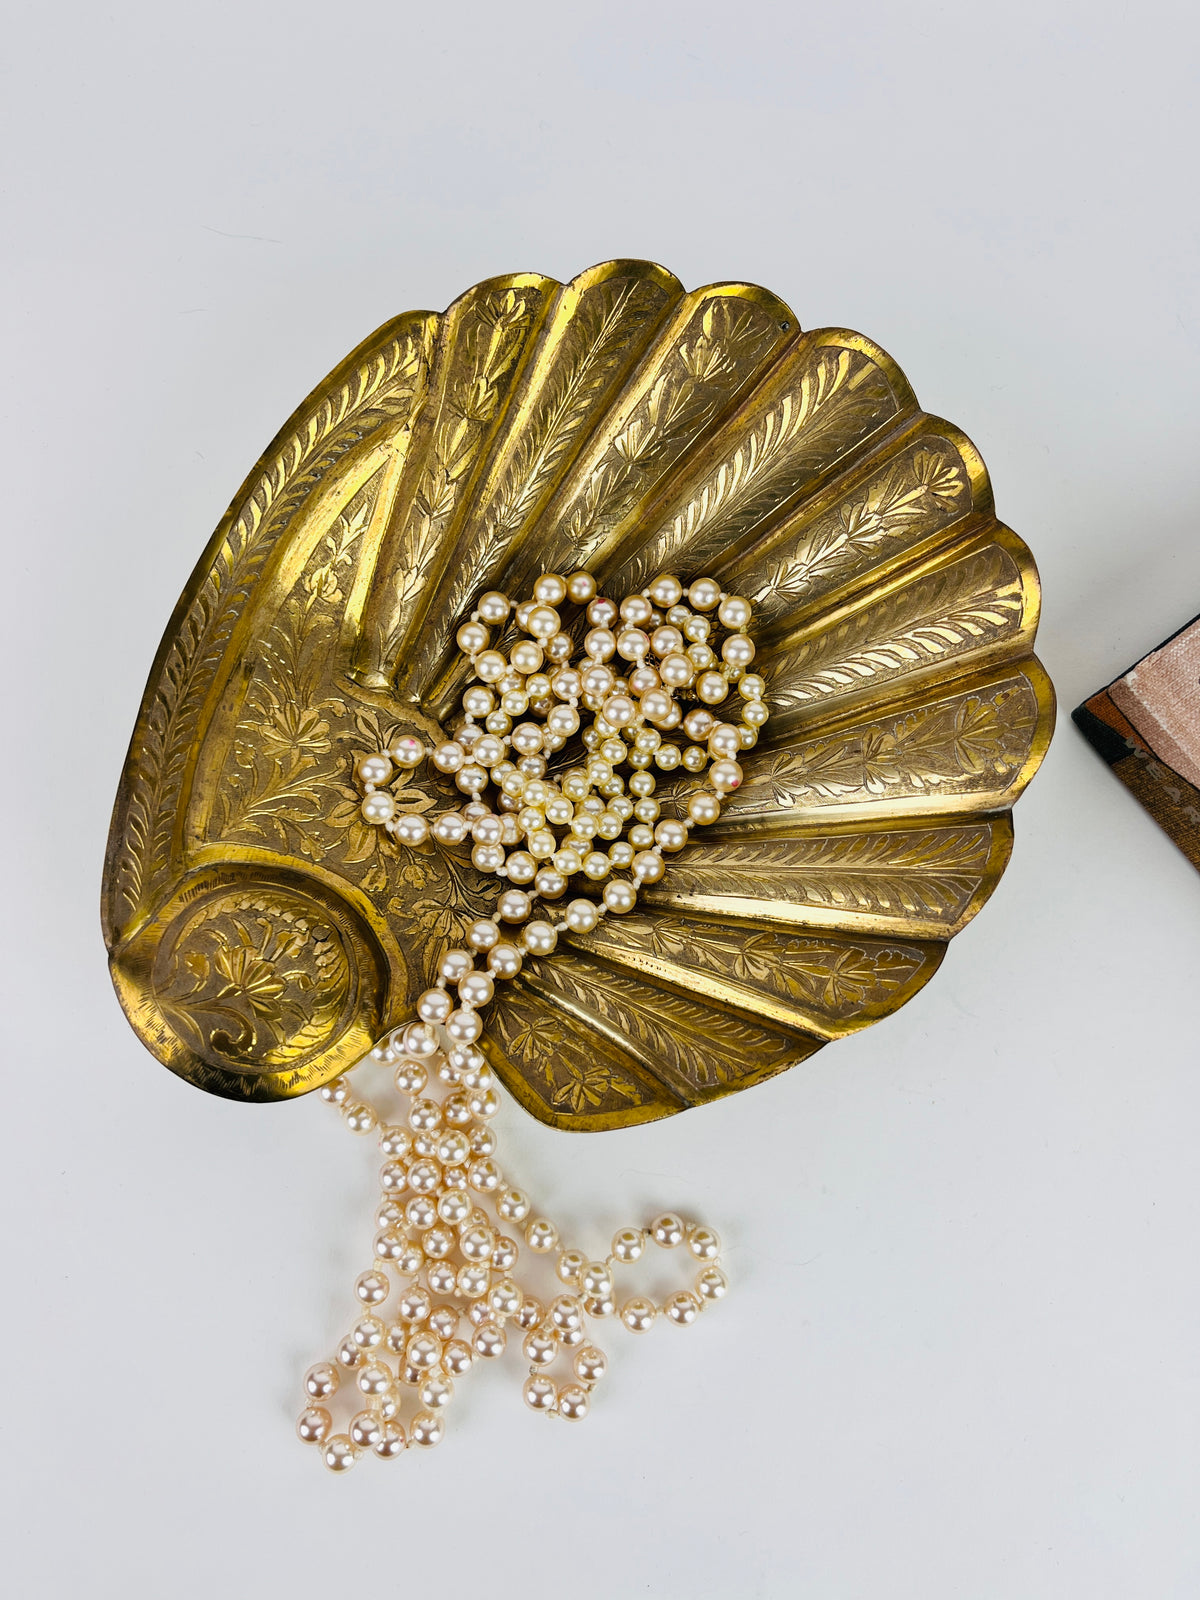 Vintage Hollywood Regency Engraved Brass Shell Bowl